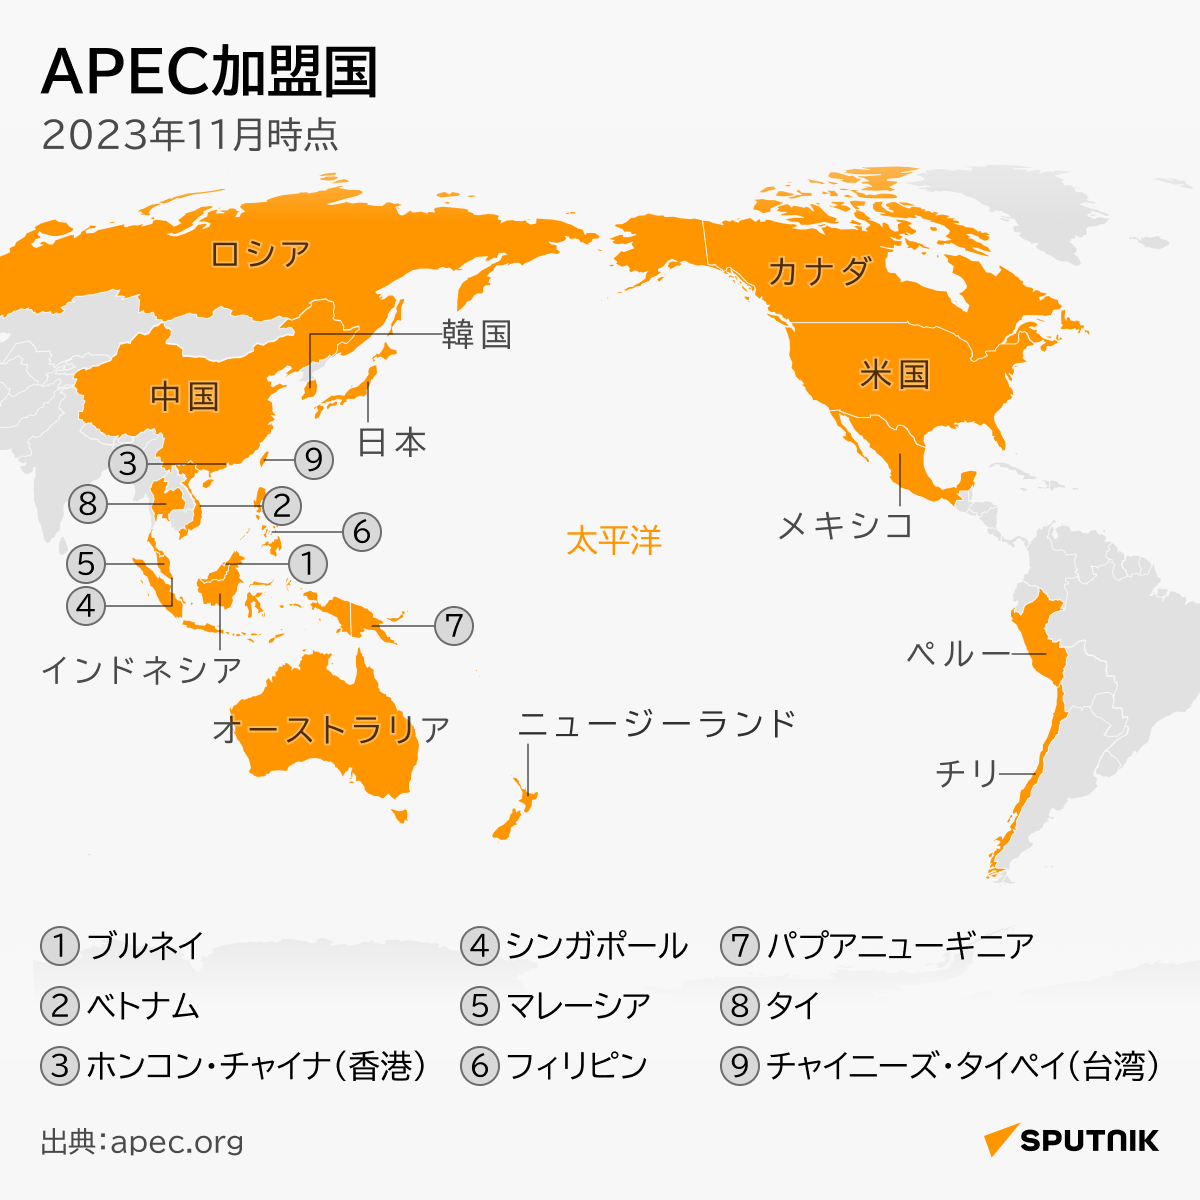 APEC加盟国 - Sputnik 日本